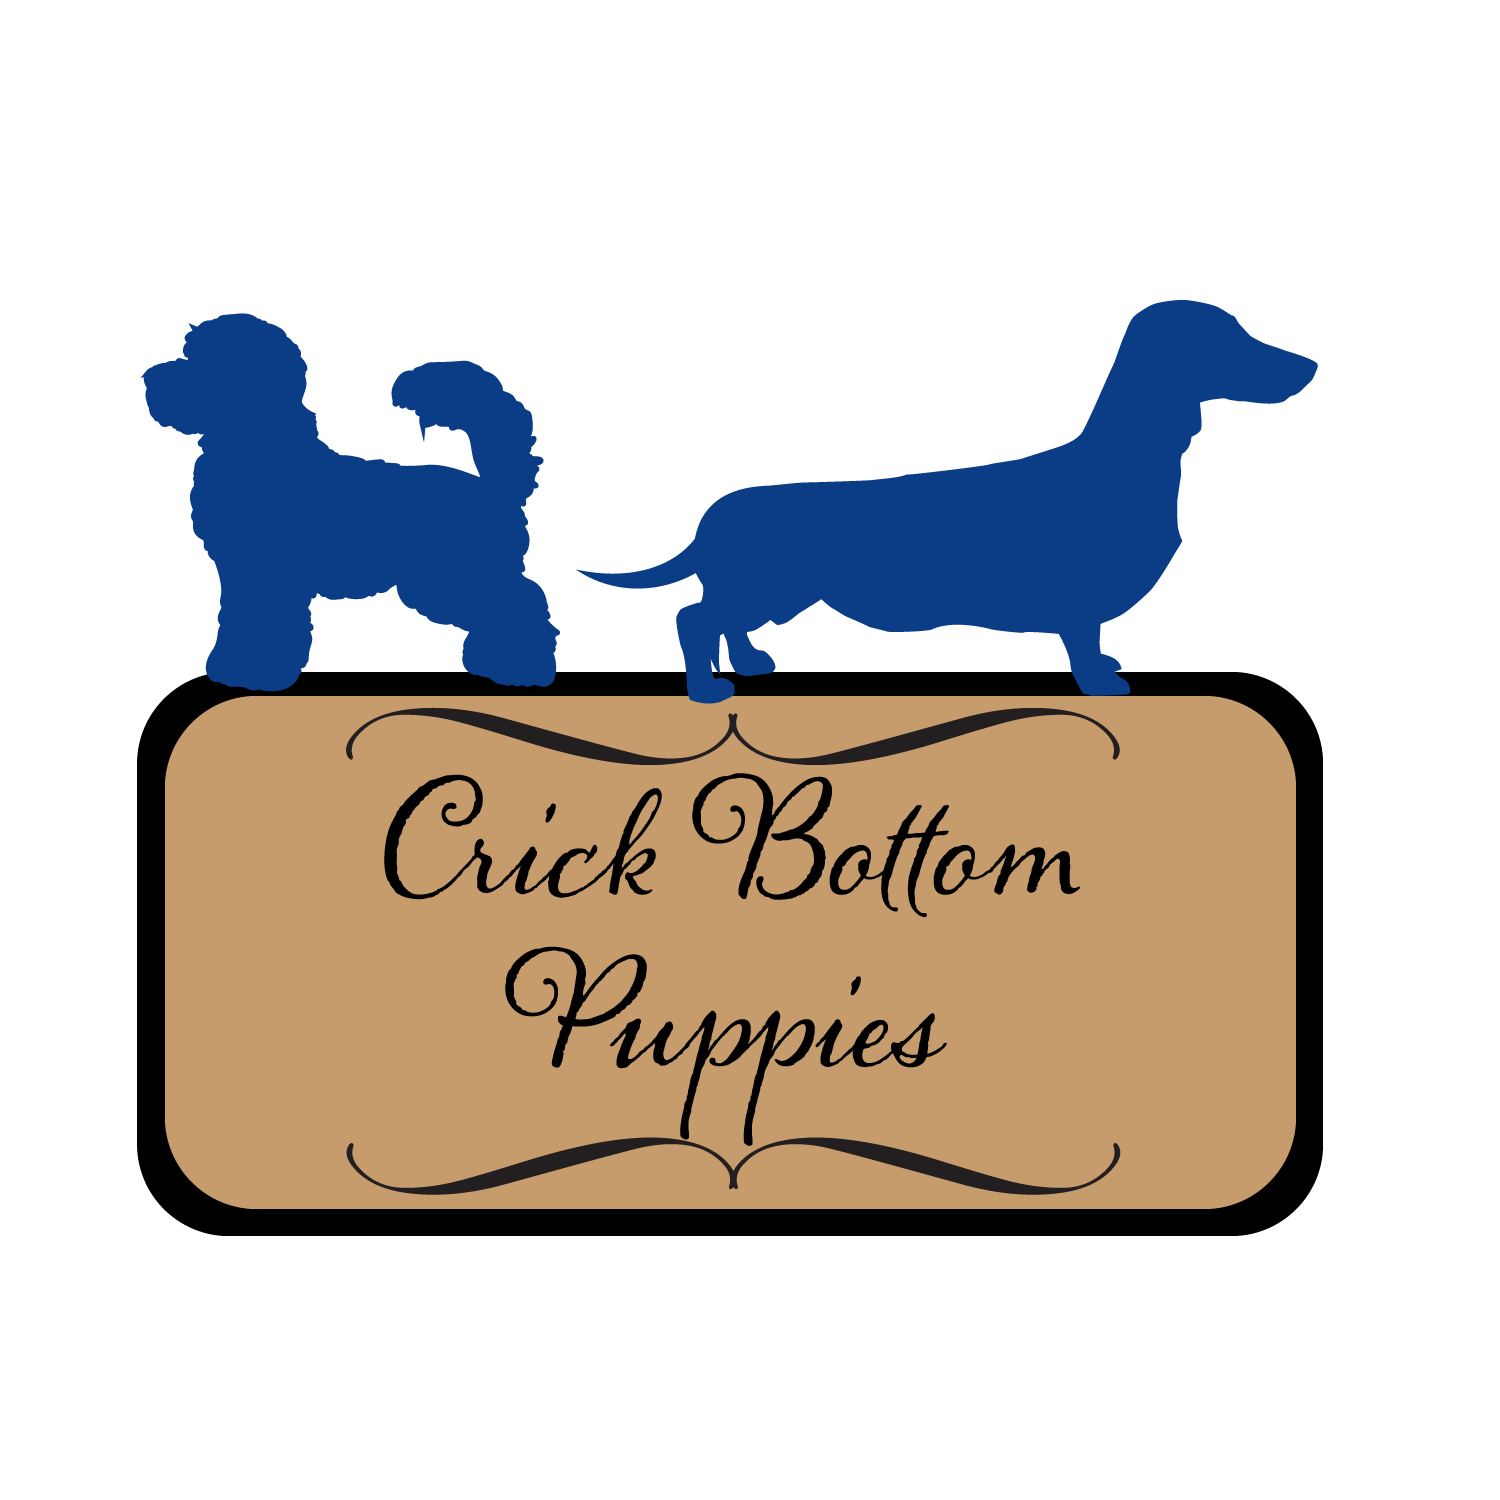 Crick Bottom Puppies Logo